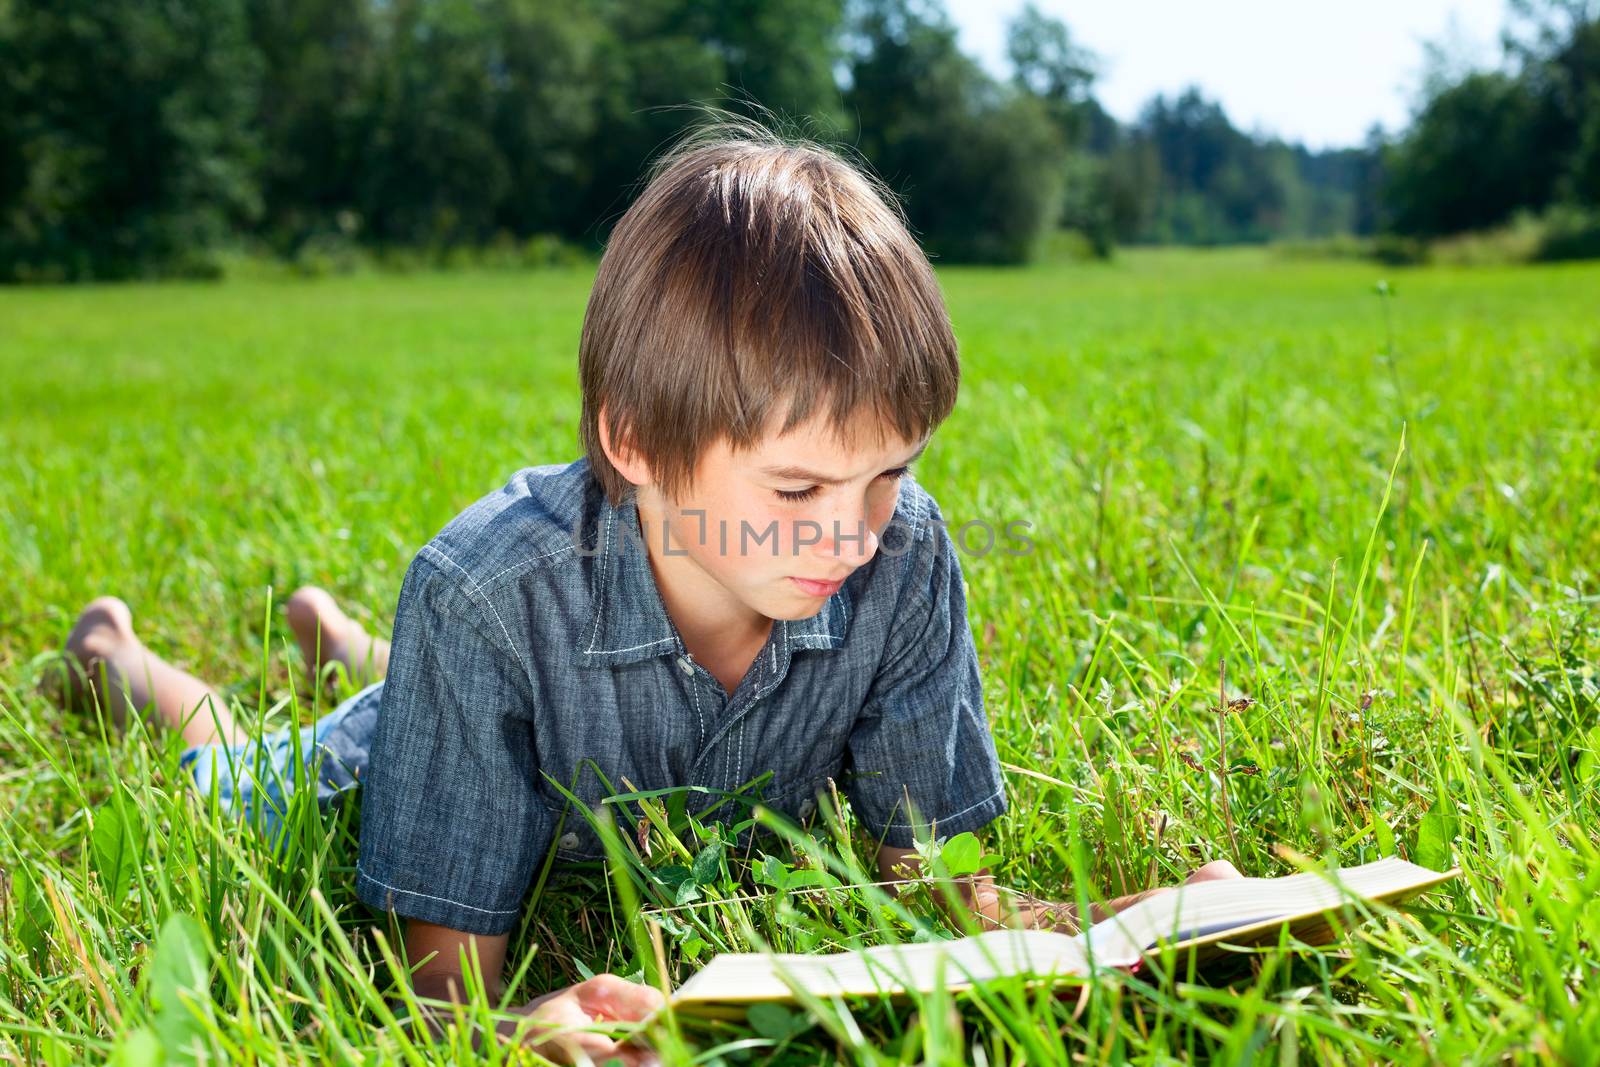 Boy lying in grass reading a book in a summer field